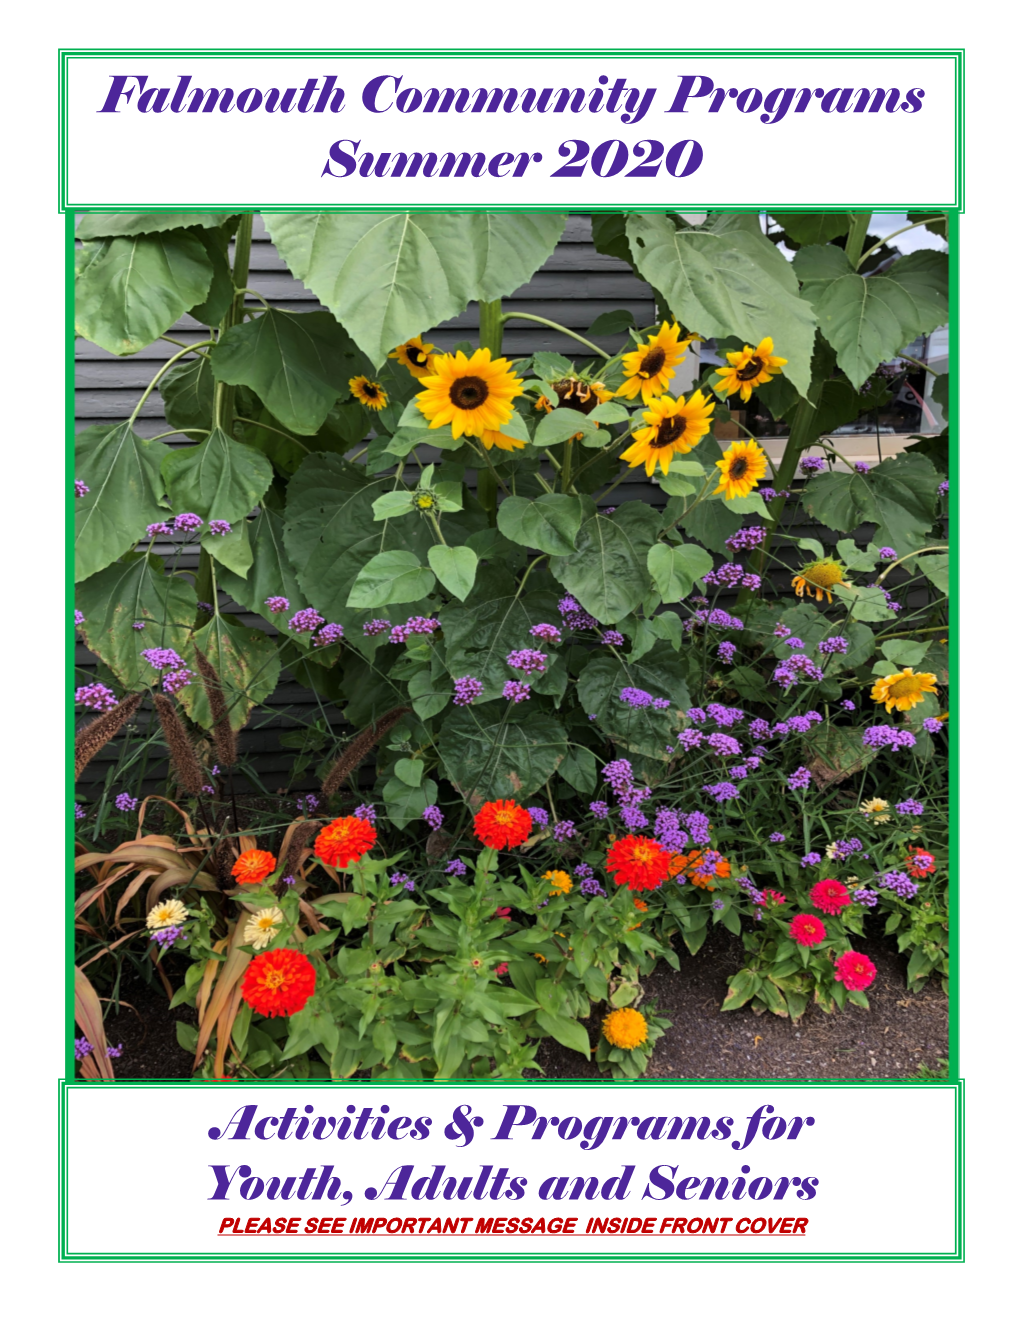 Falmouth Community Programs Summer 2020